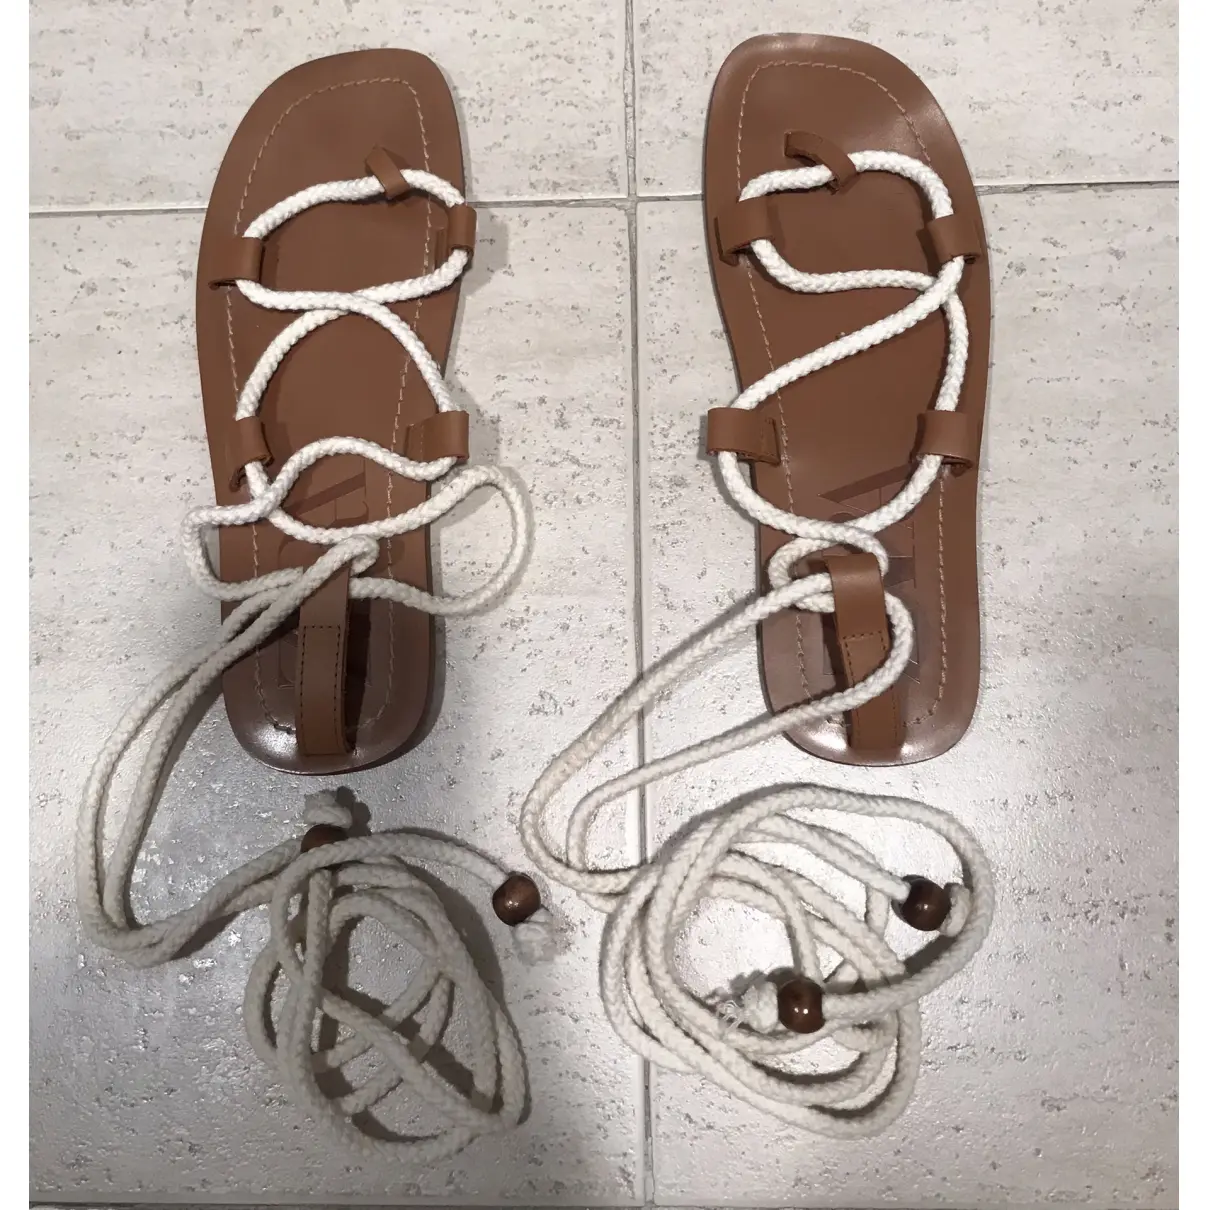 Buy Zara Leather sandal online